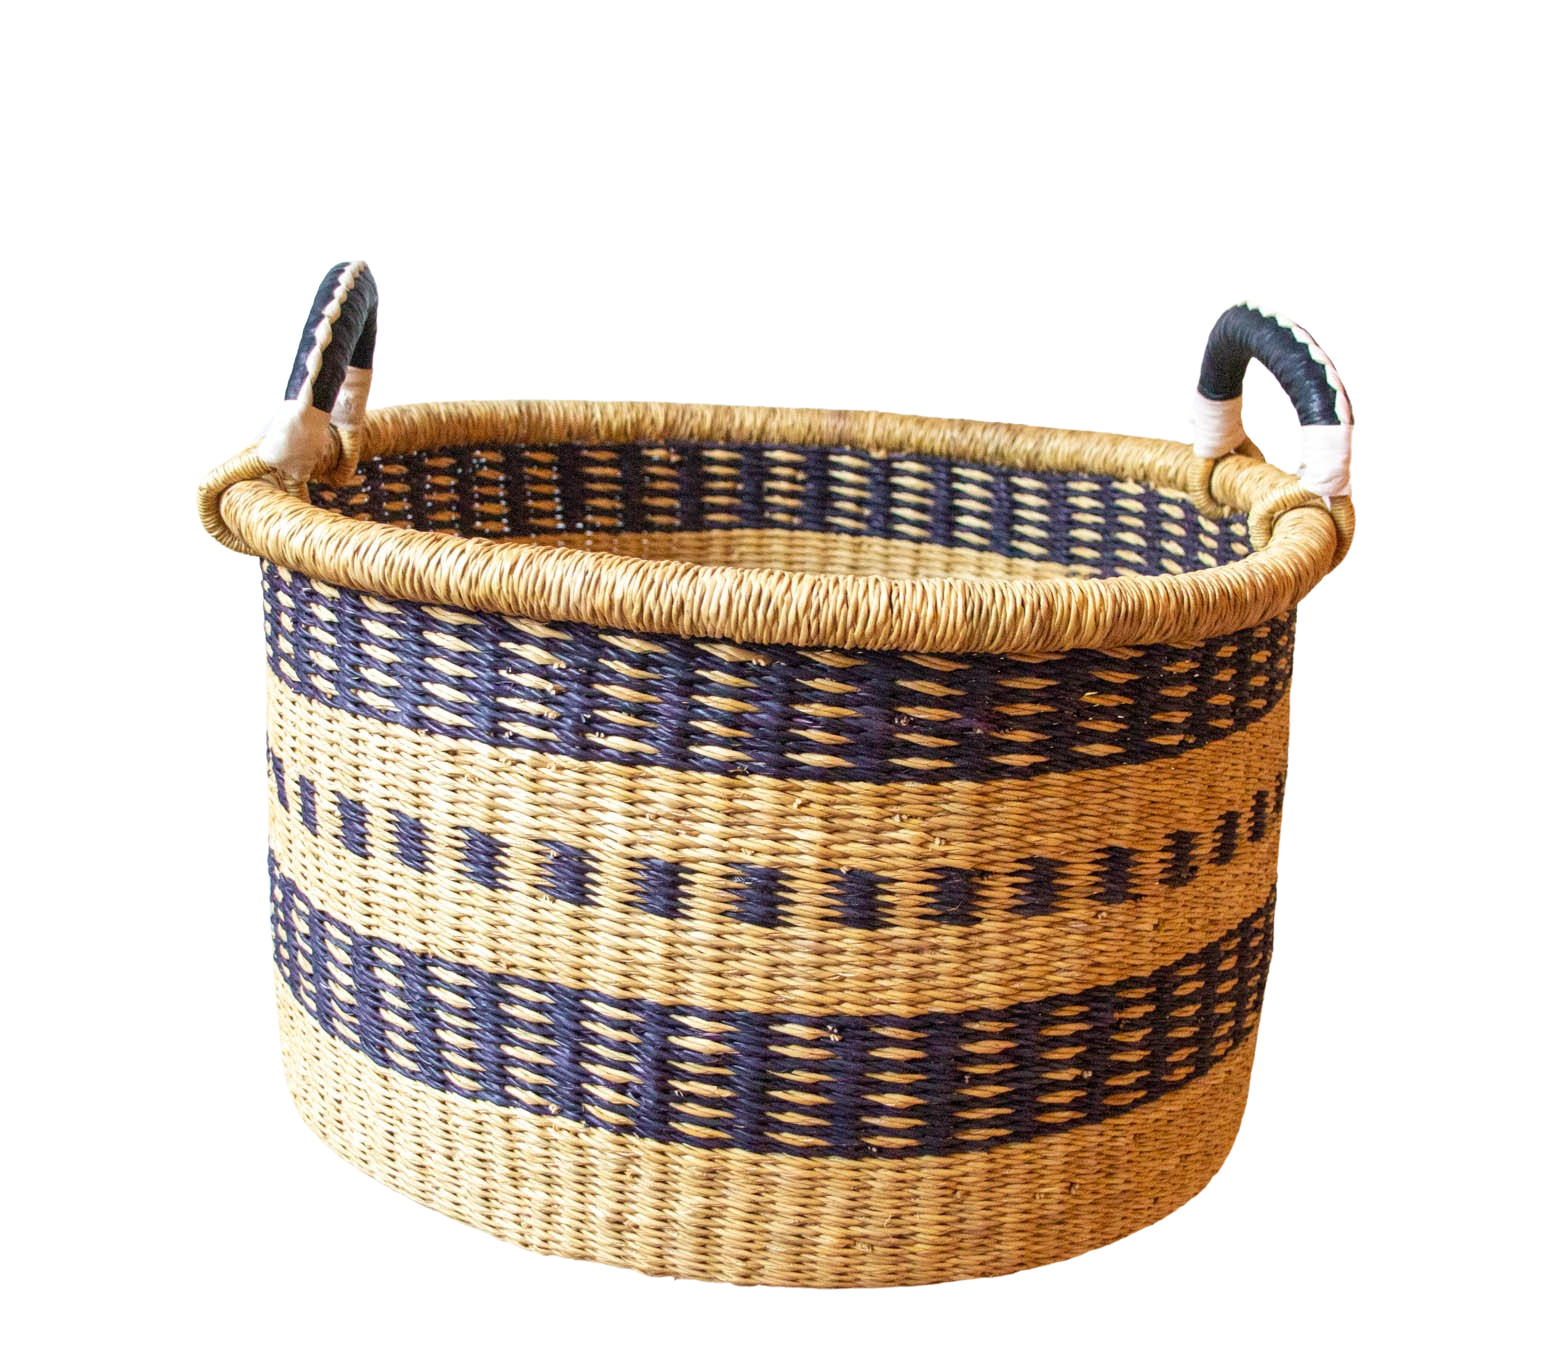 B&W Baba Half laundry basket